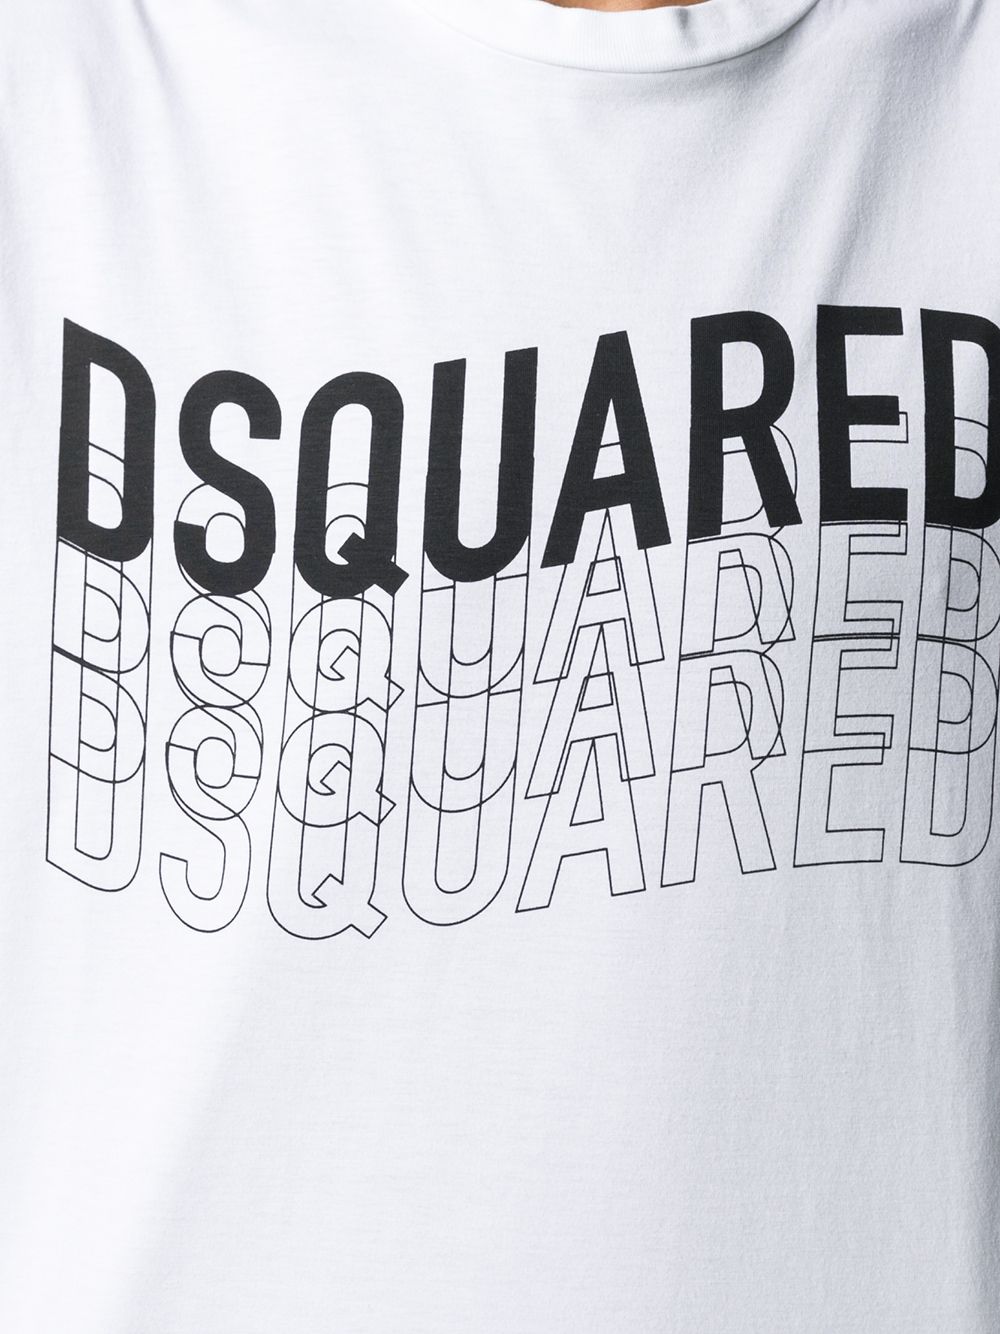 DSQUARED2 Wave Logo T-Shirt White - MAISONDEFASHION.COM